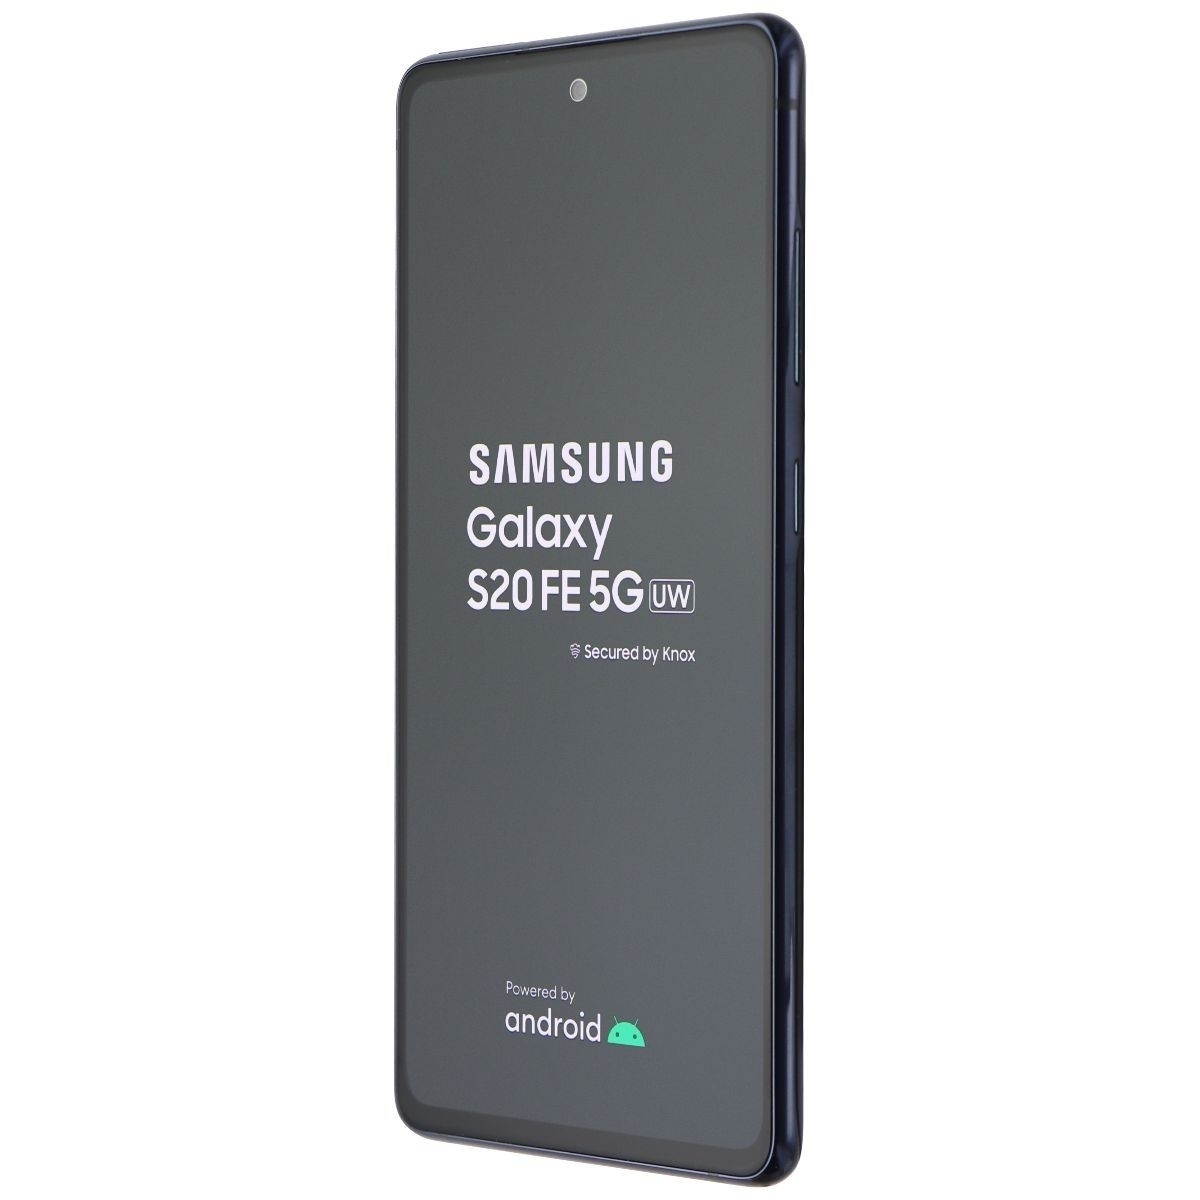 Samsung Galaxy S20 FE 5G UW (6.5-in) (SM-G781V) Spectrum Only - 128GB/Cloud Navy